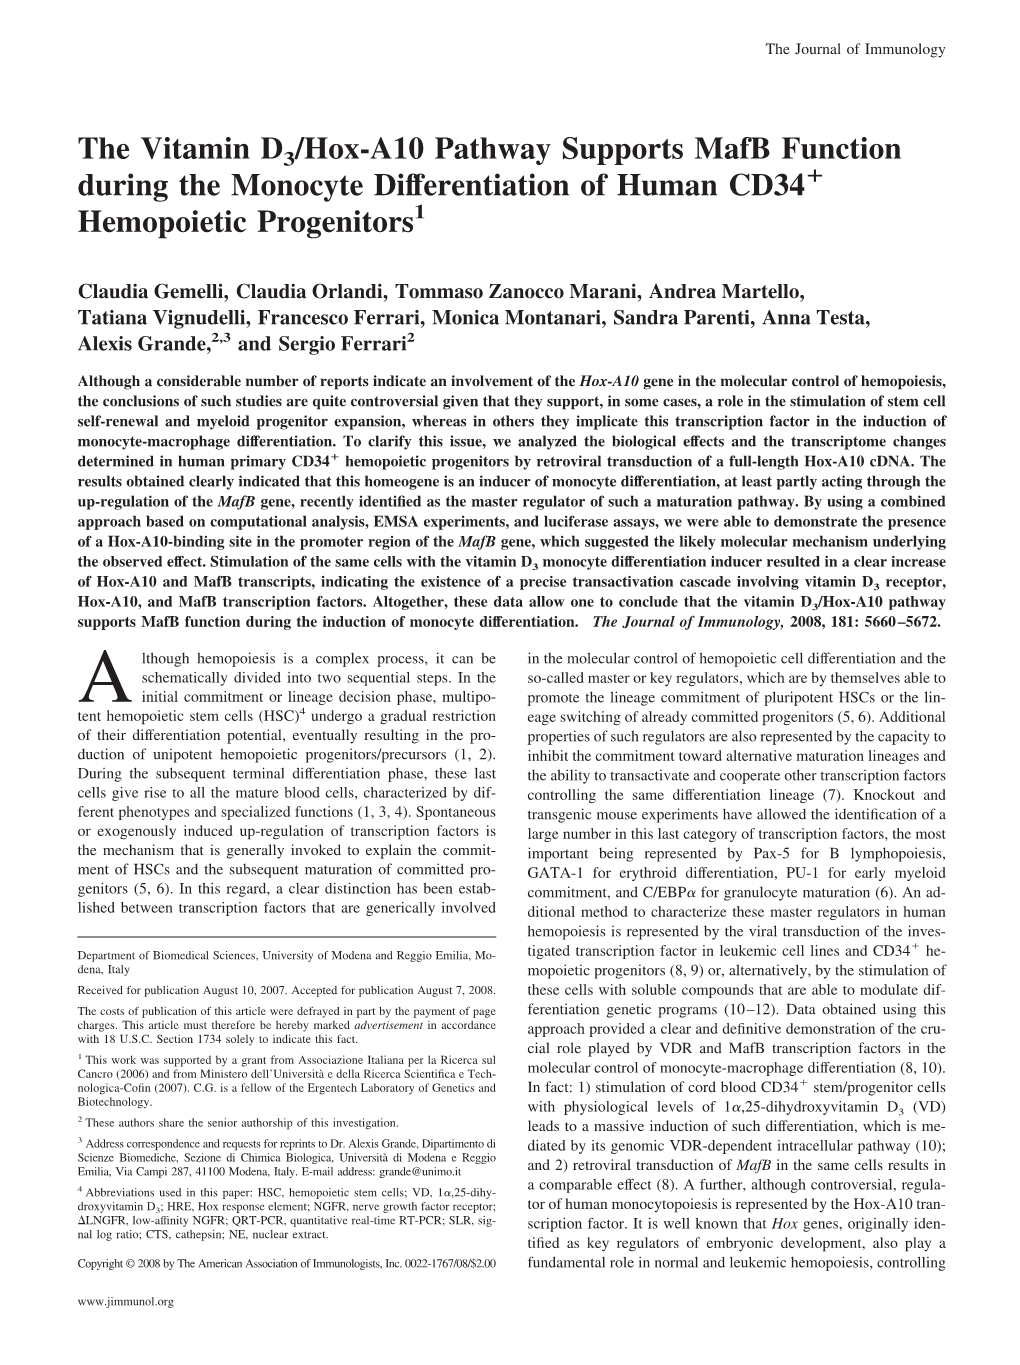 Hemopoietic Progenitors + Differentiation of Human CD34